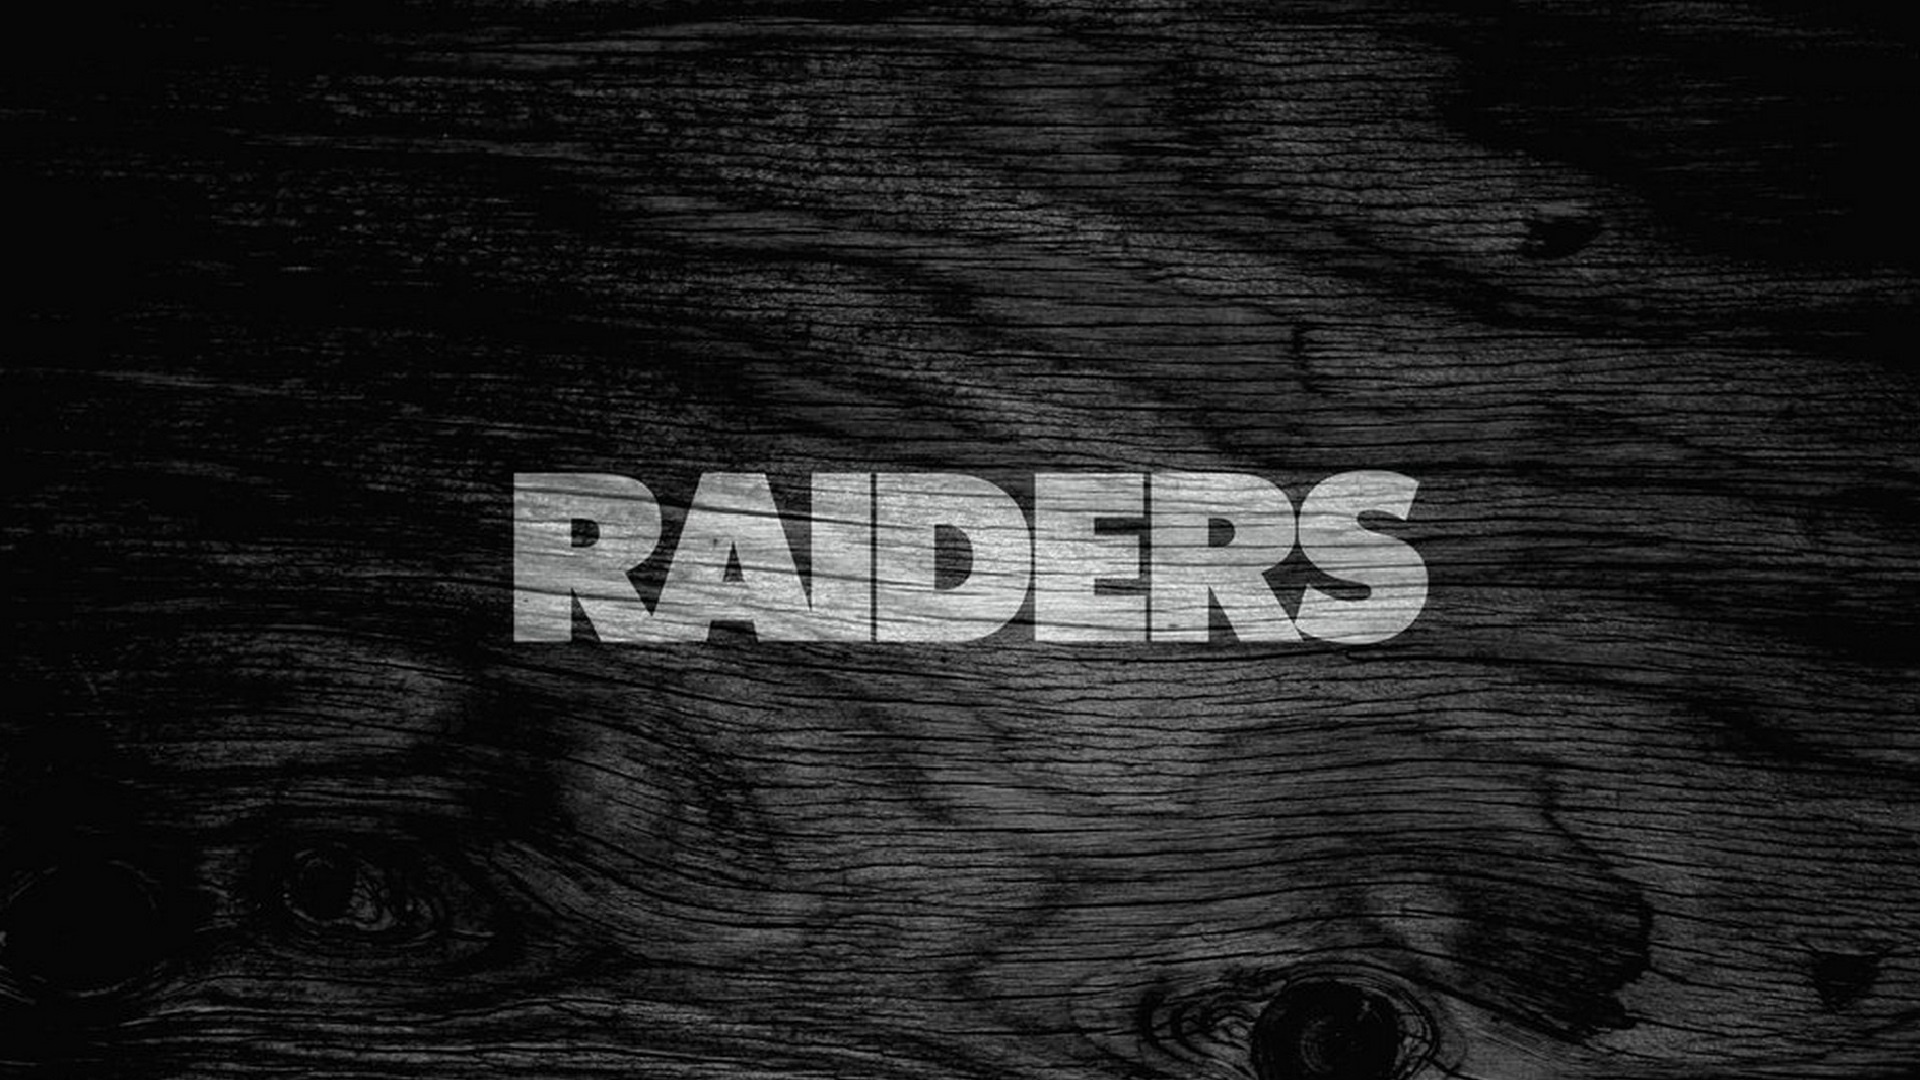 Raiders cool wallpaper